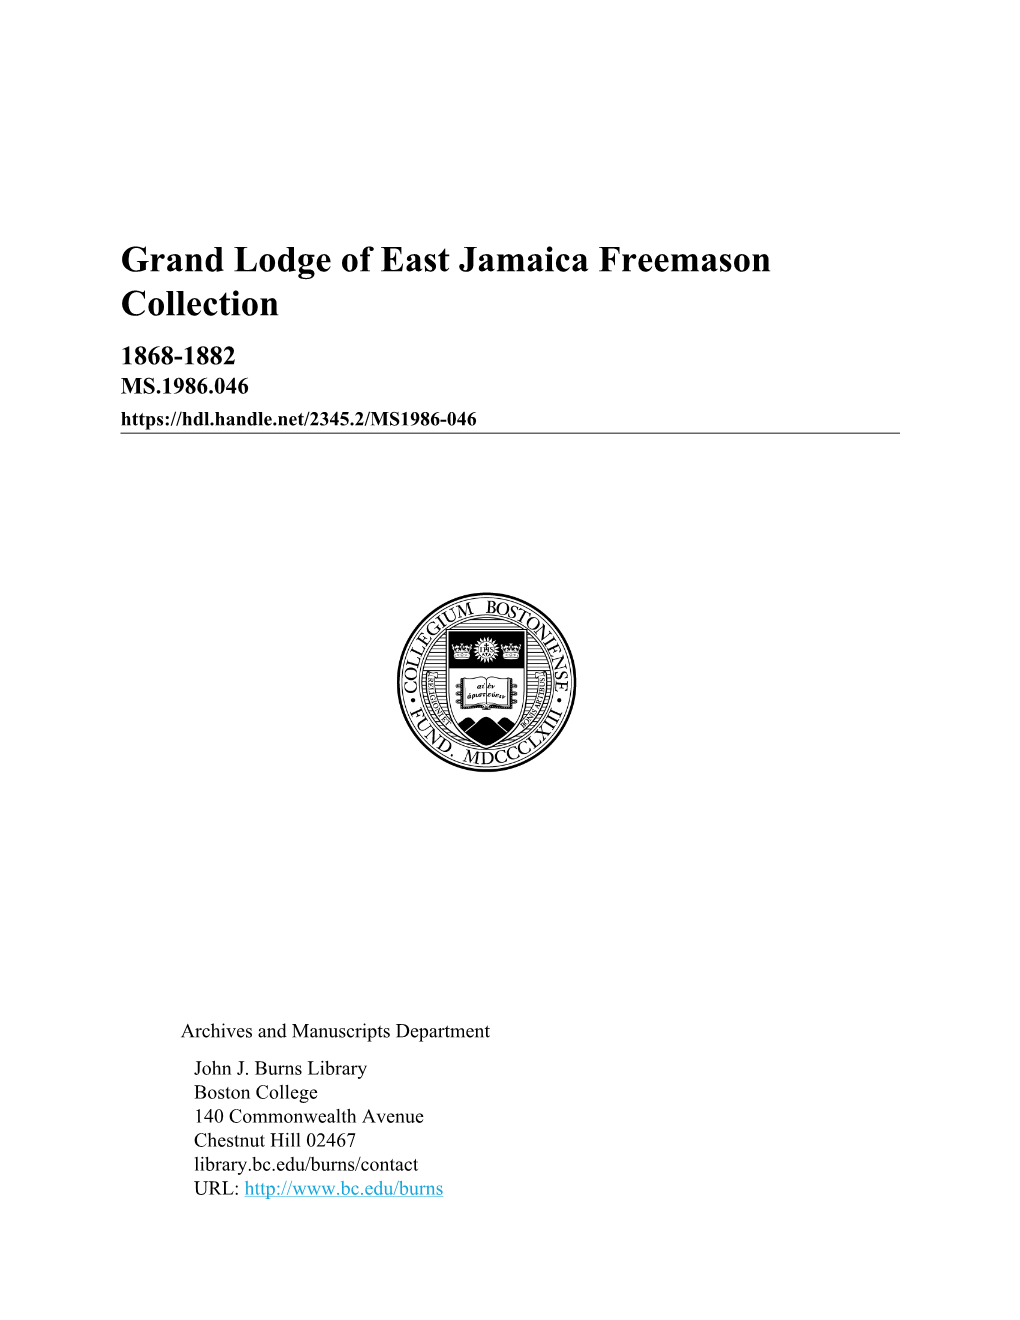 Grand Lodge of East Jamaica Freemason Collection 1868-1882 MS.1986.046